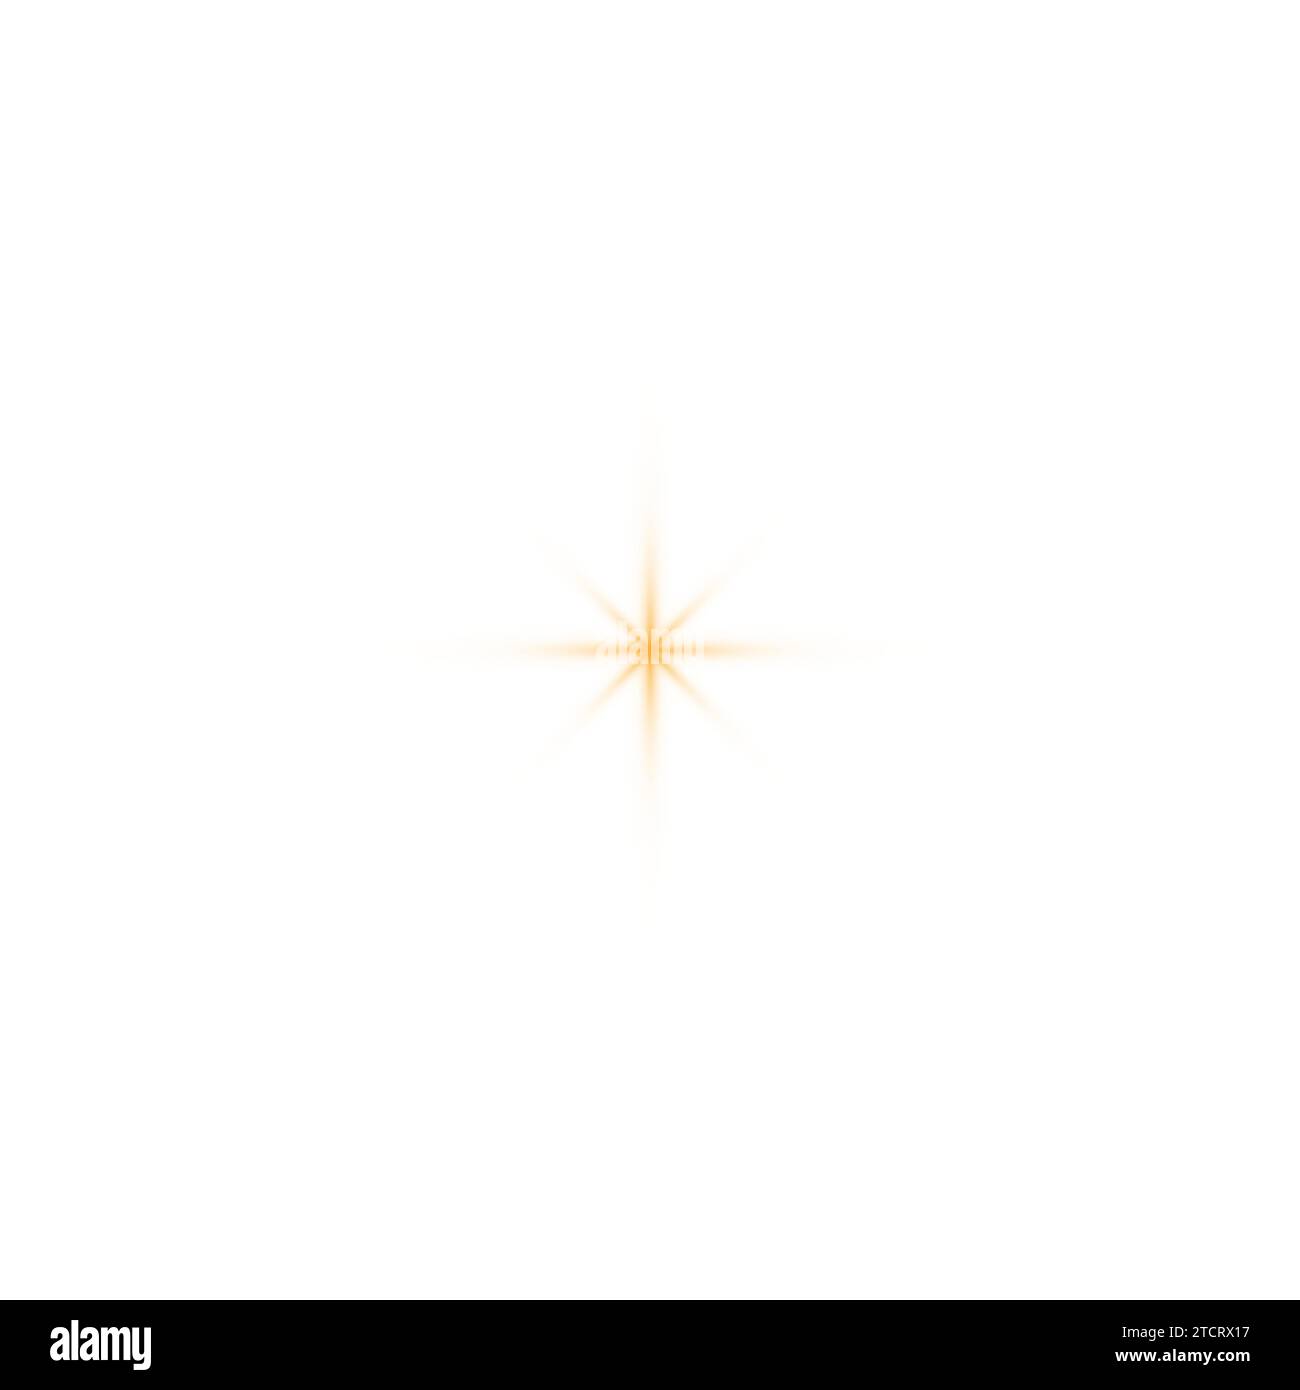 Glowing Glare Star Icon. Vector illustration. Stock Vector